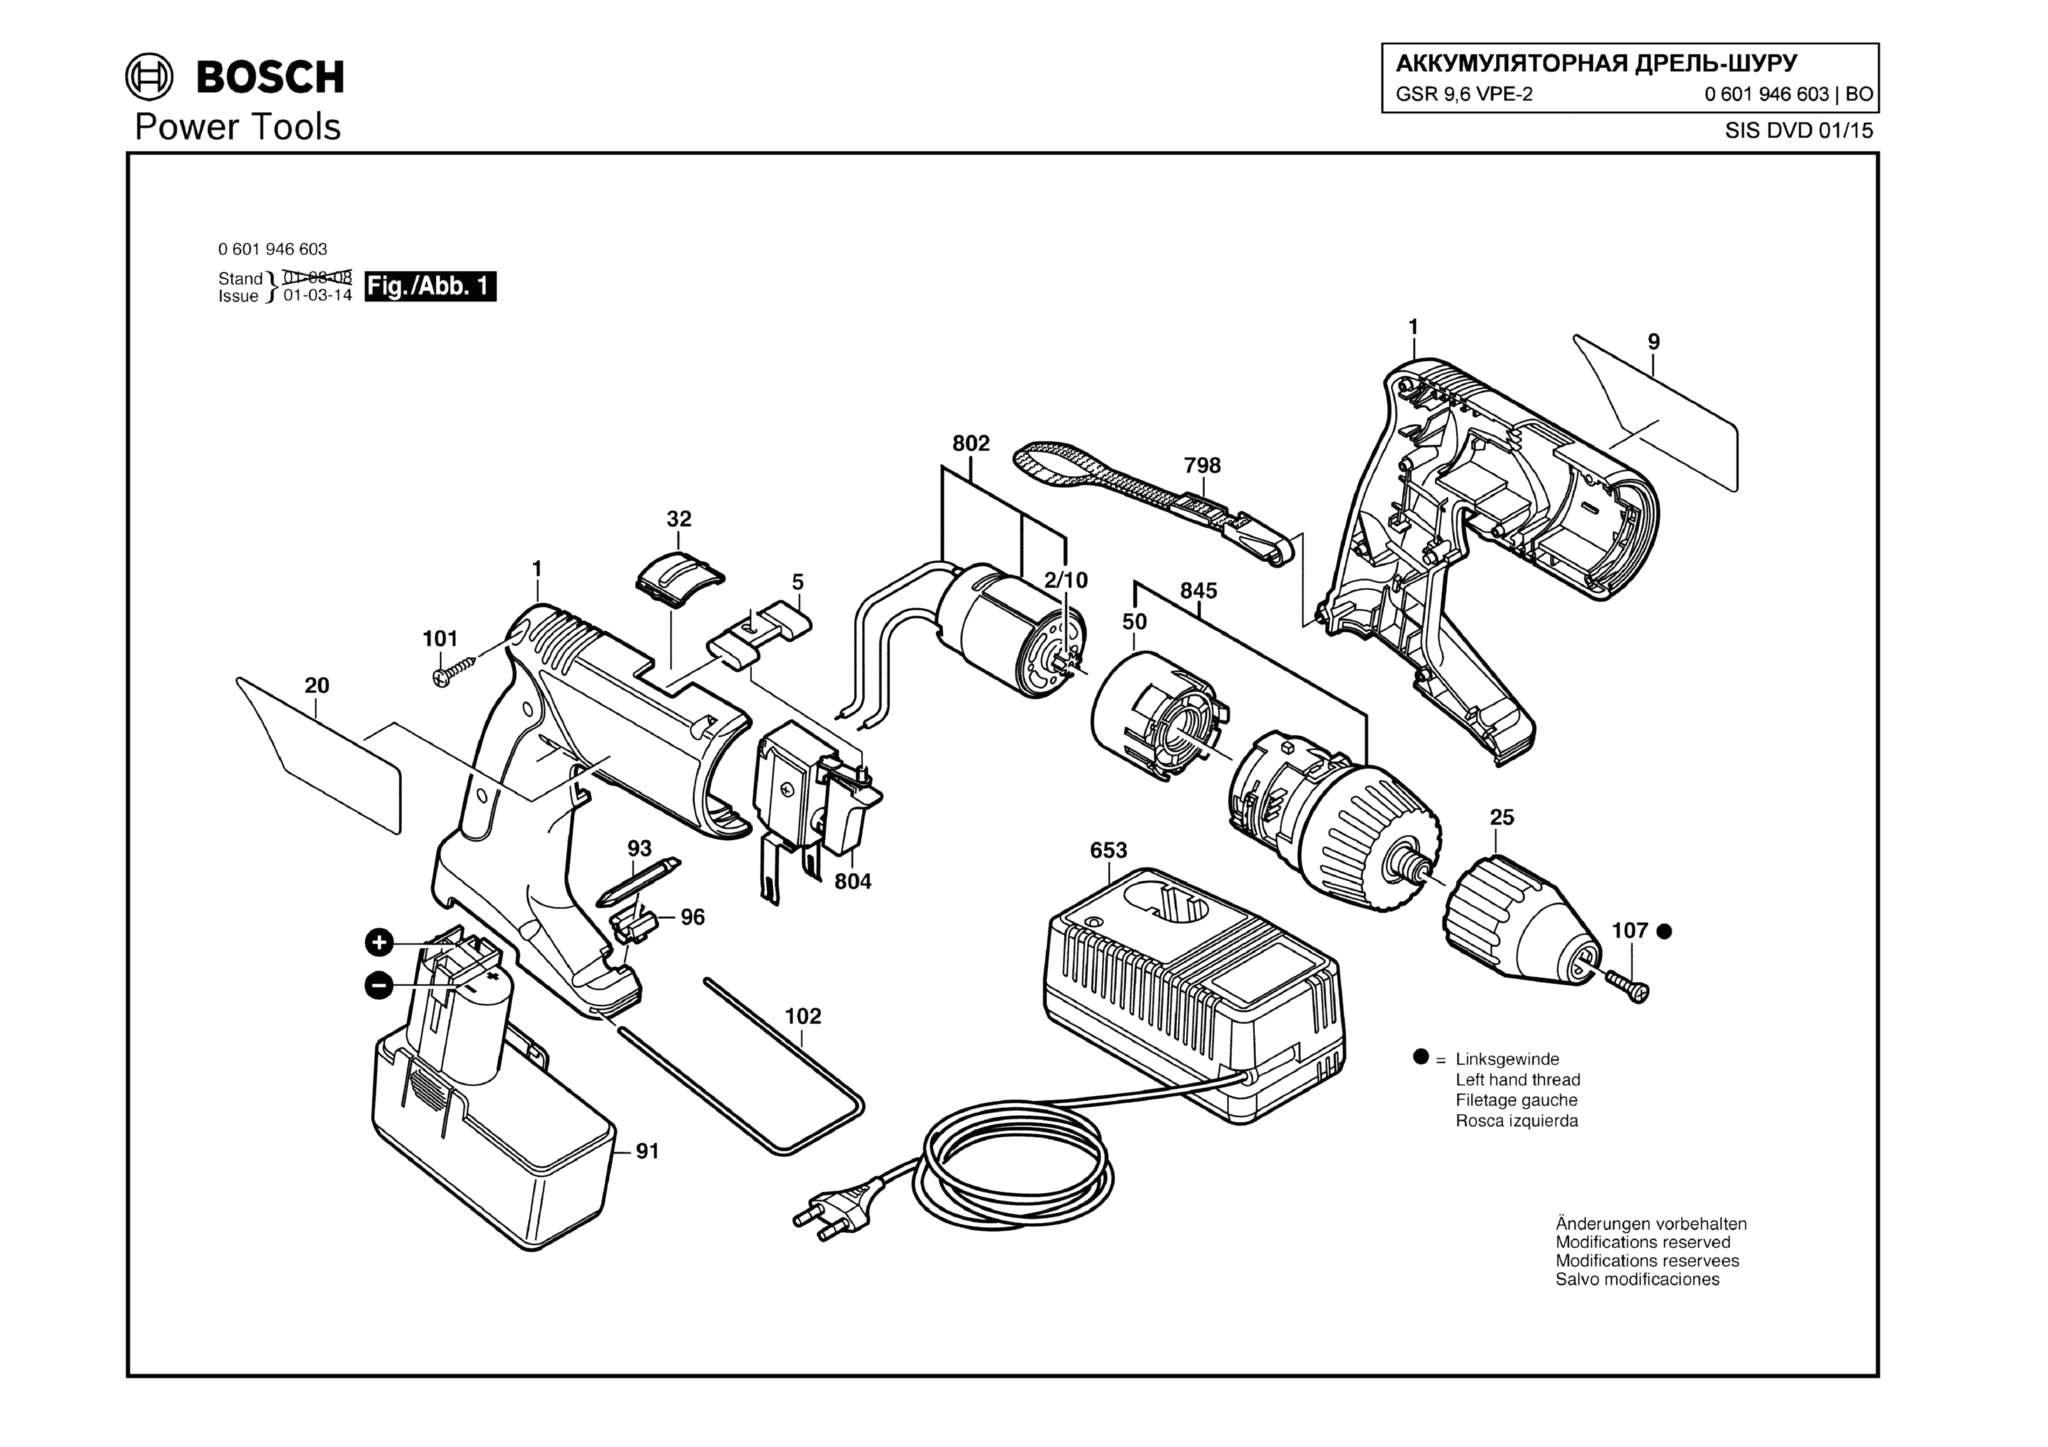 Запчасти, схема и деталировка Bosch GSR 9,6 VPE-2 (ТИП 0601946603)